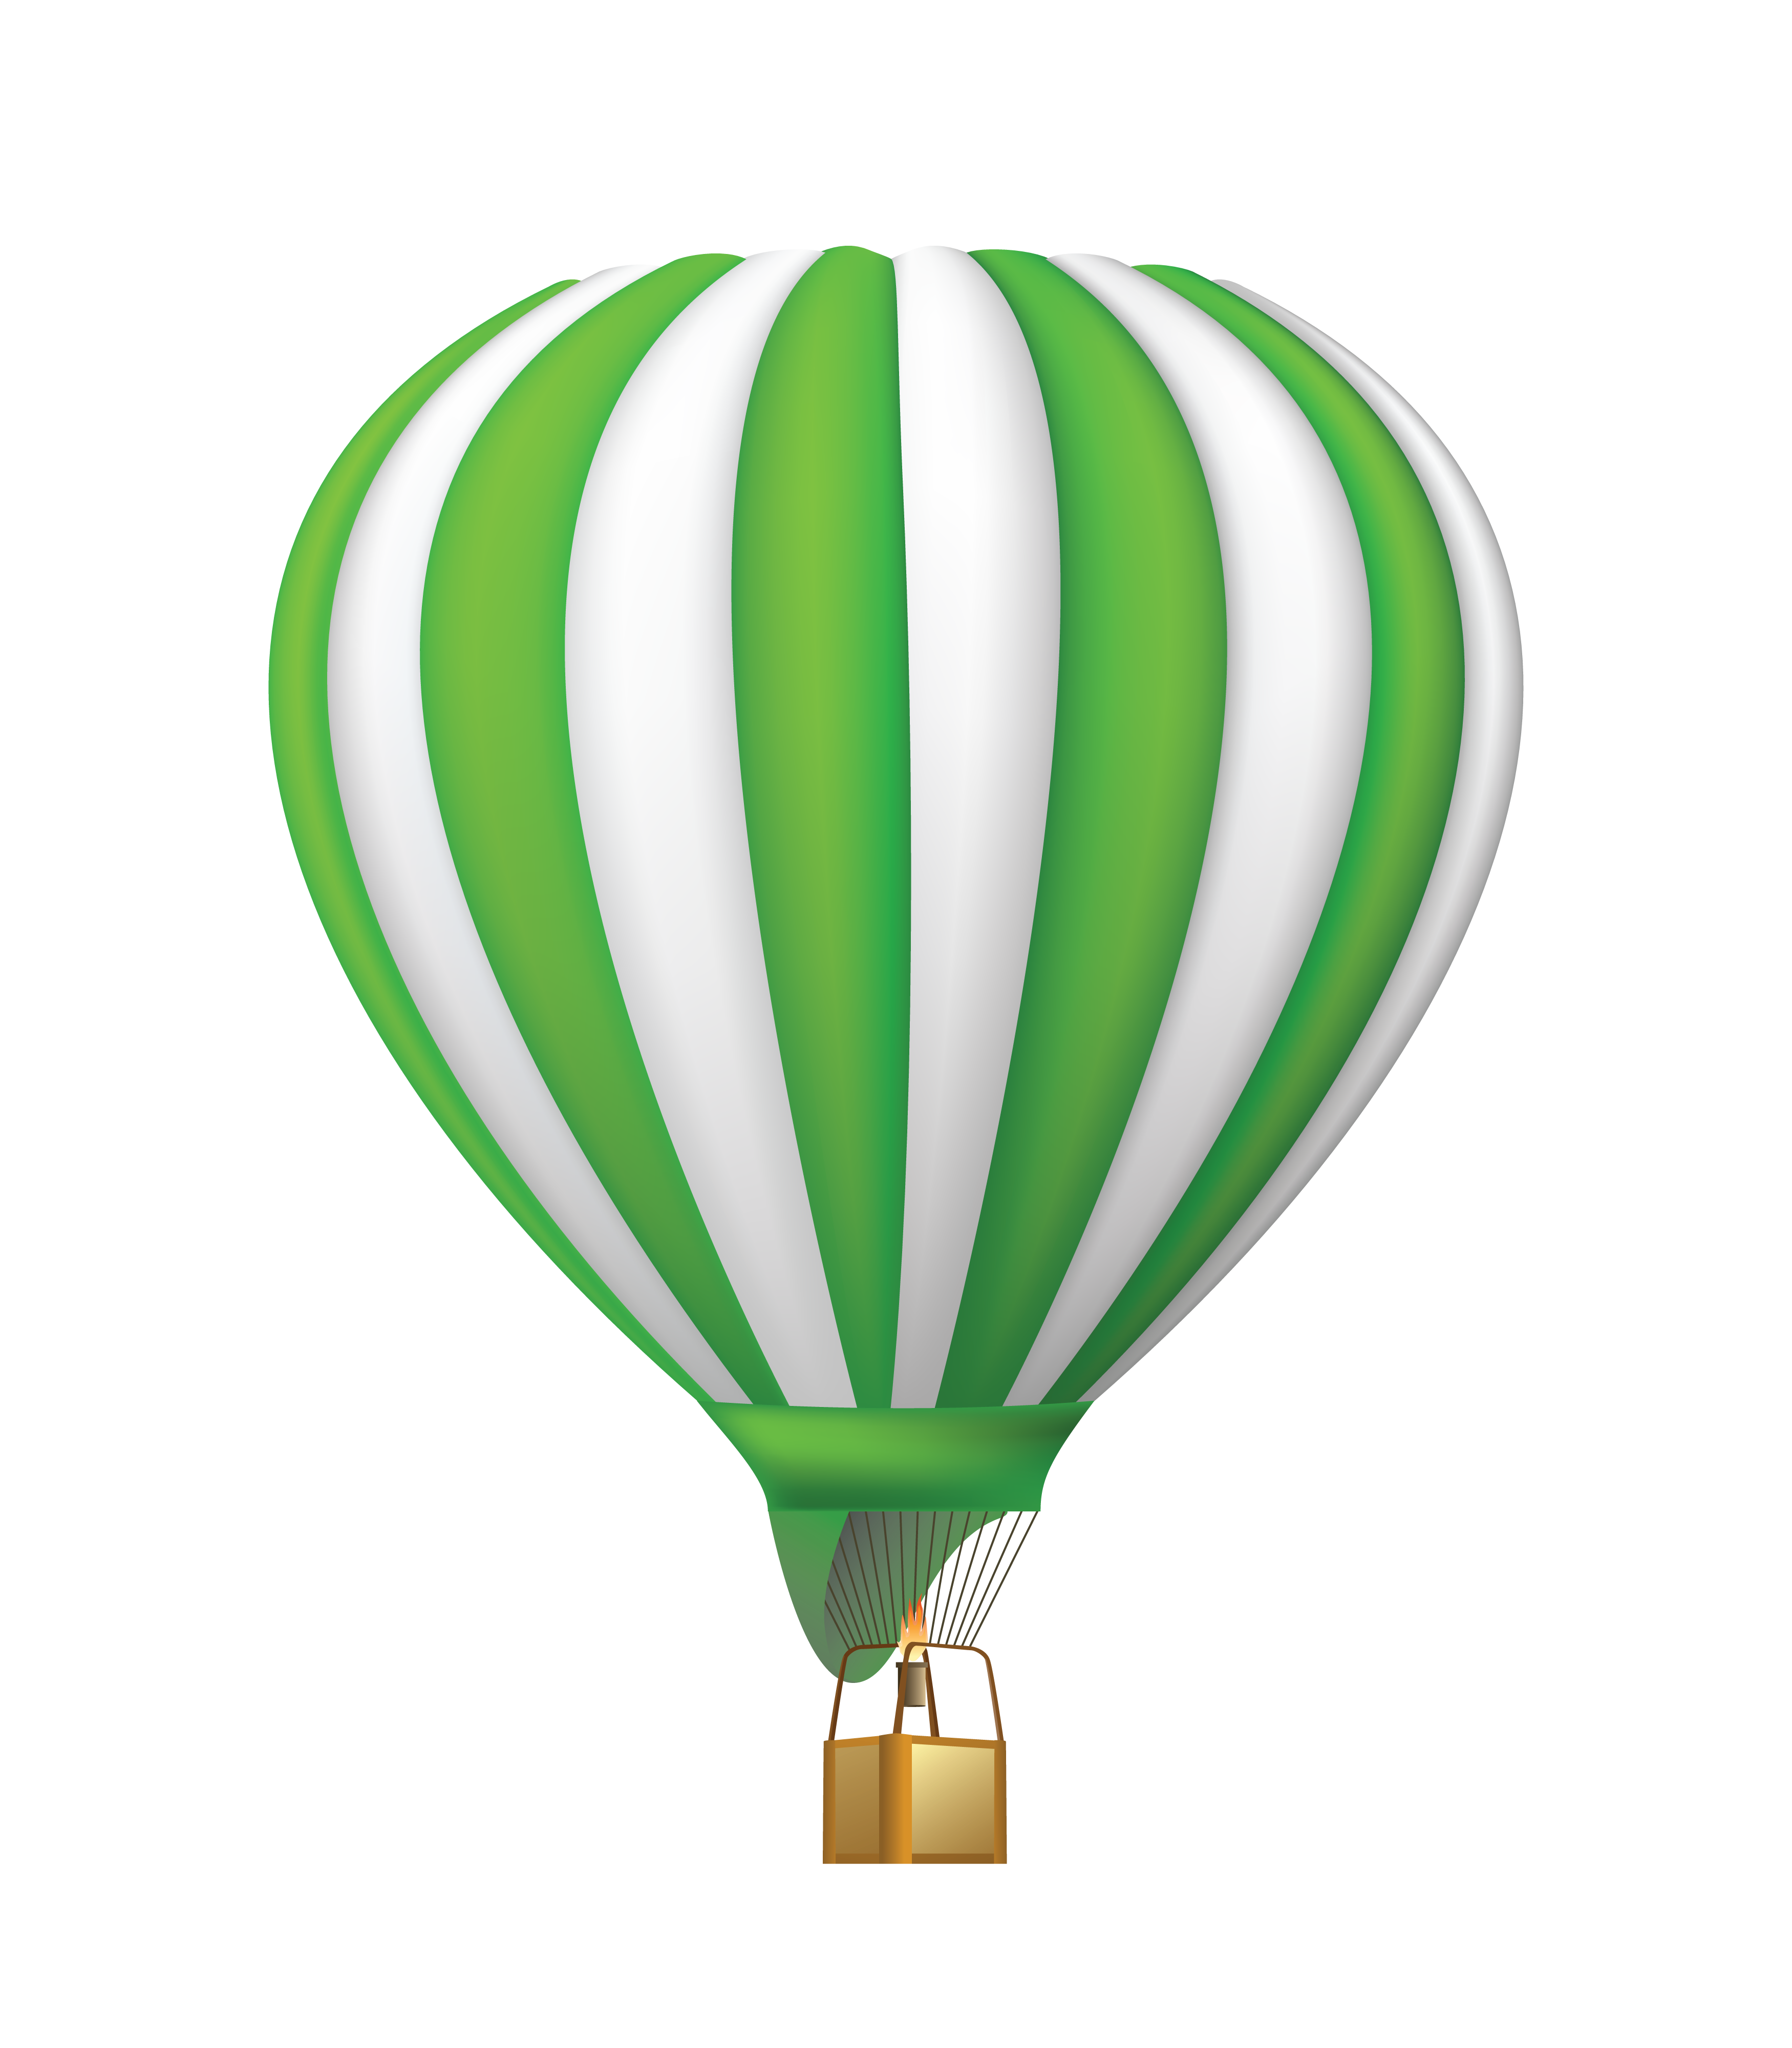 Balon udara